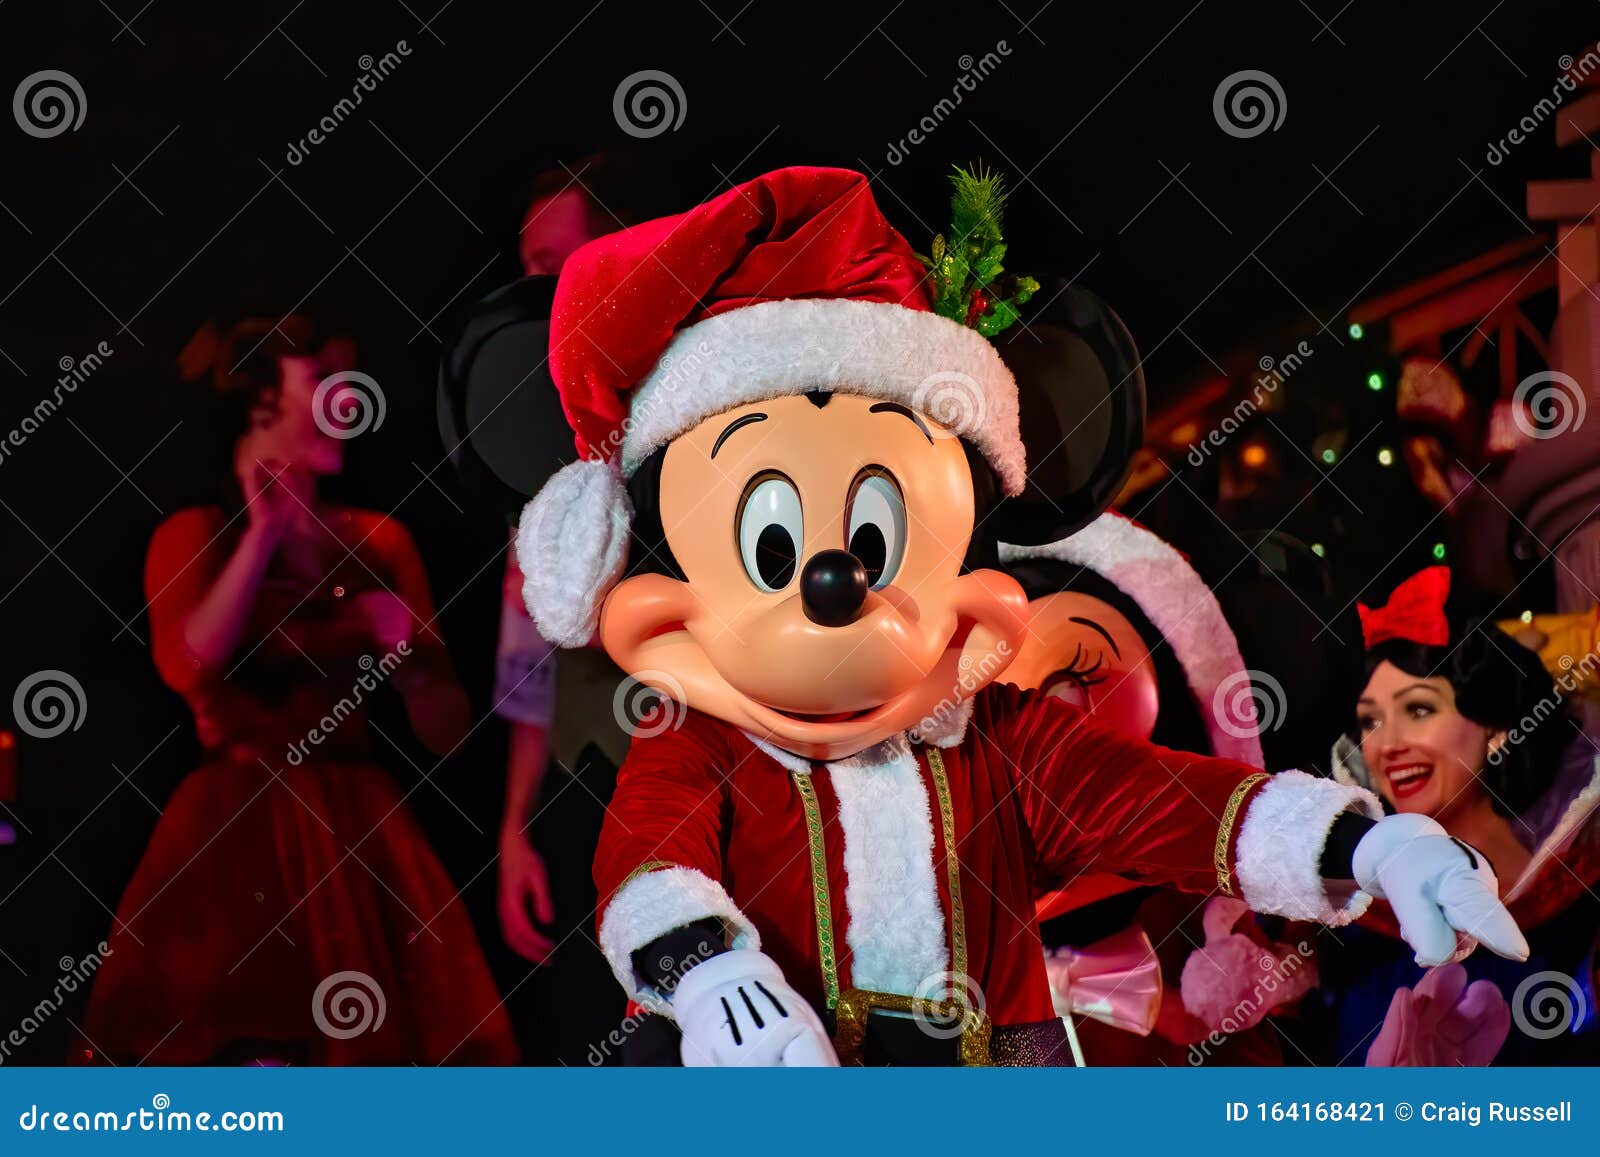 Christmas Images Clip Art Free Download  Mickey mouse navideño, Navidad  disney, Minnie navideña